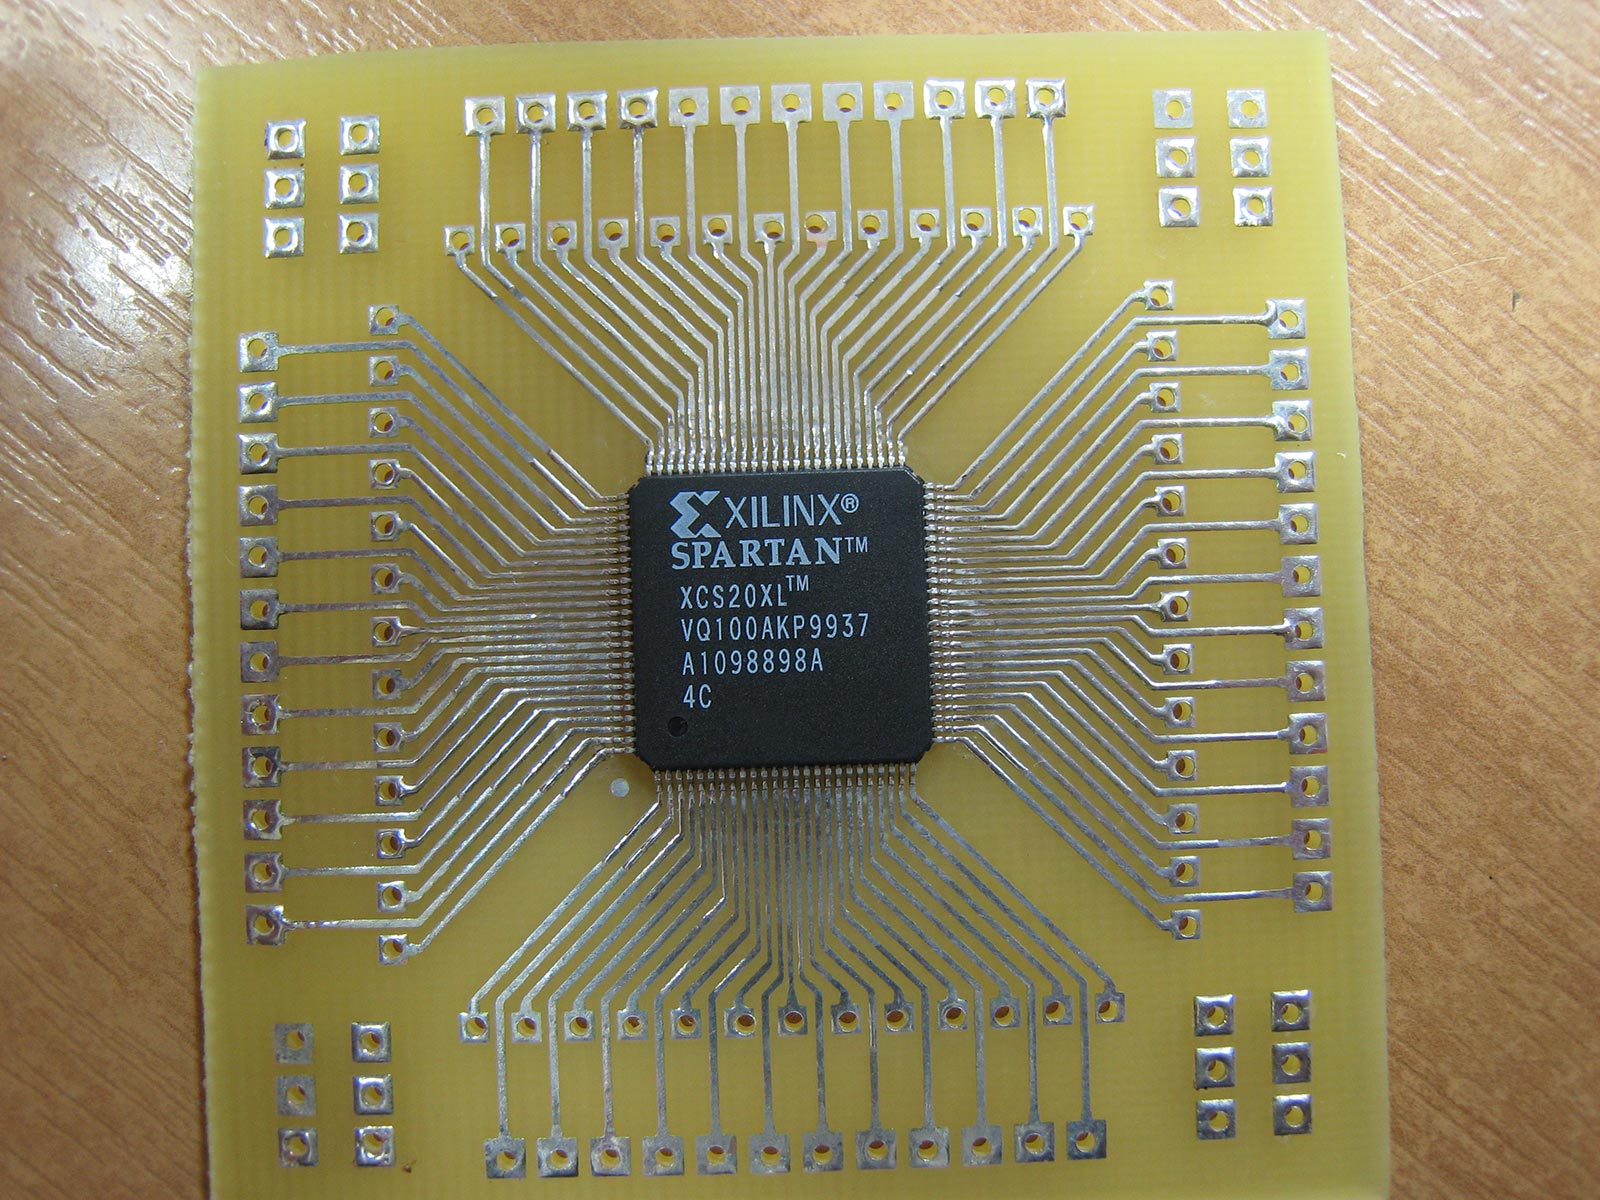 My first FPGA homemade pcb